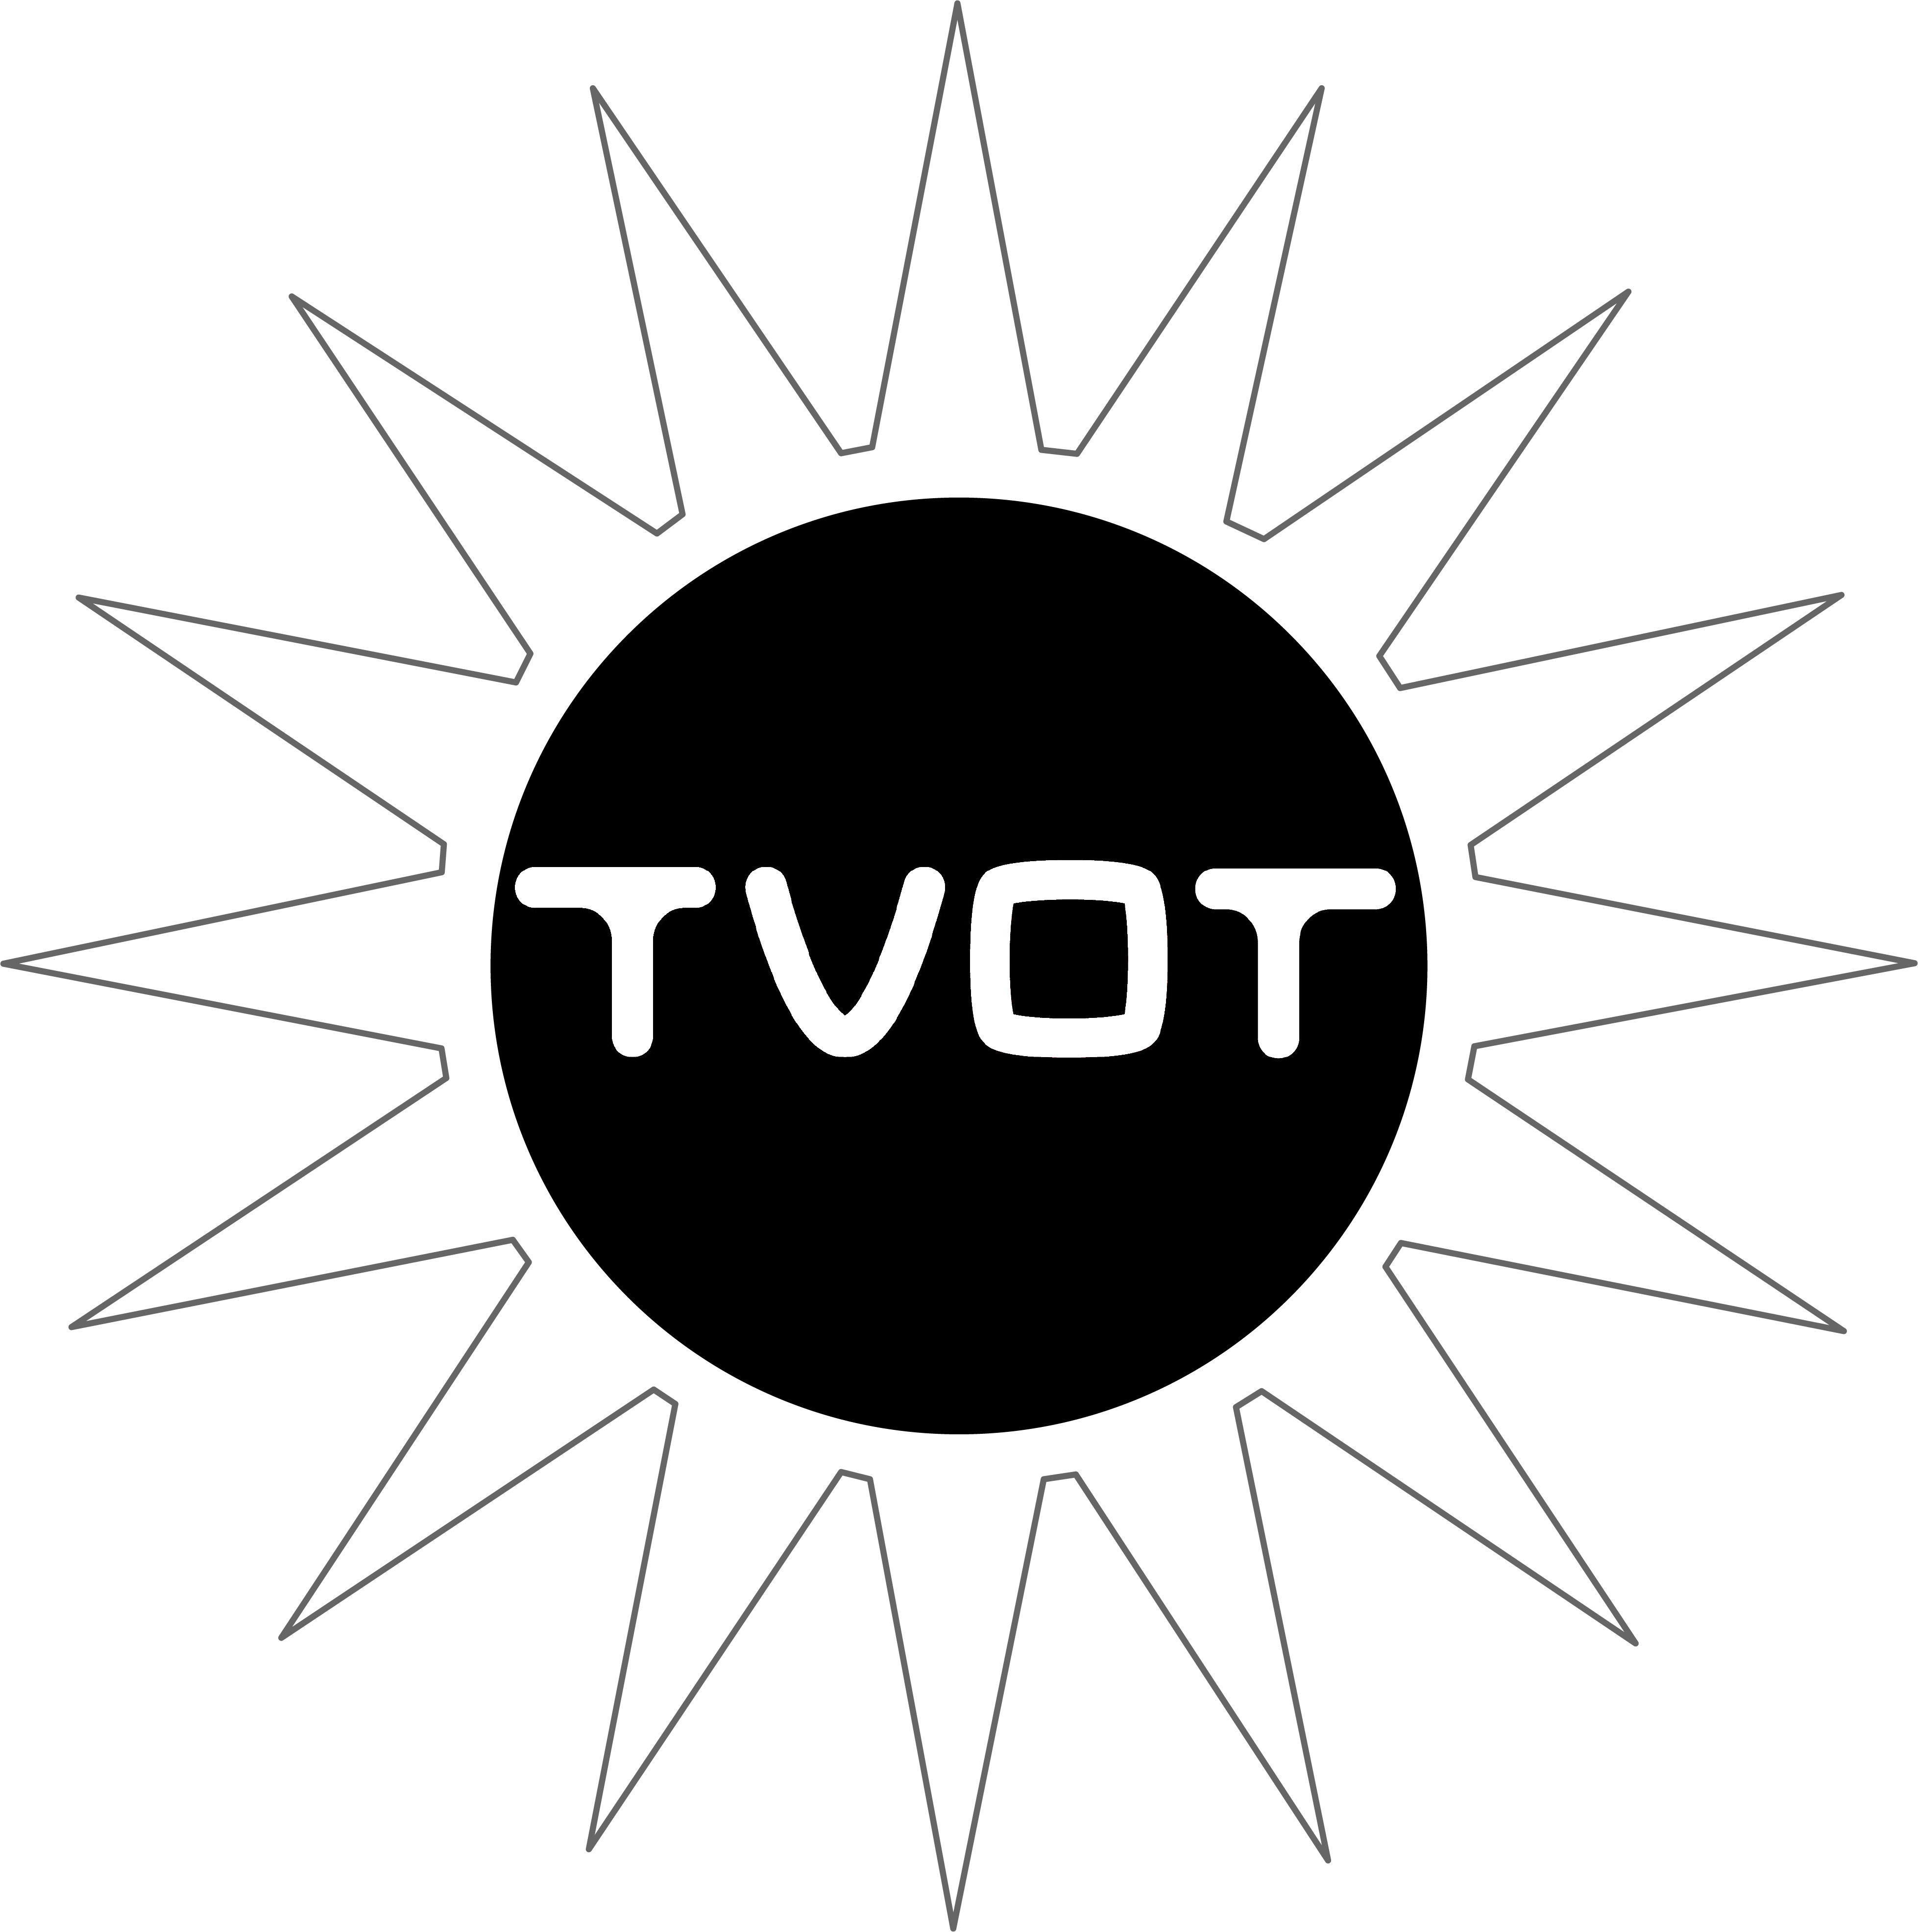 TVOT returns to San Francisco!